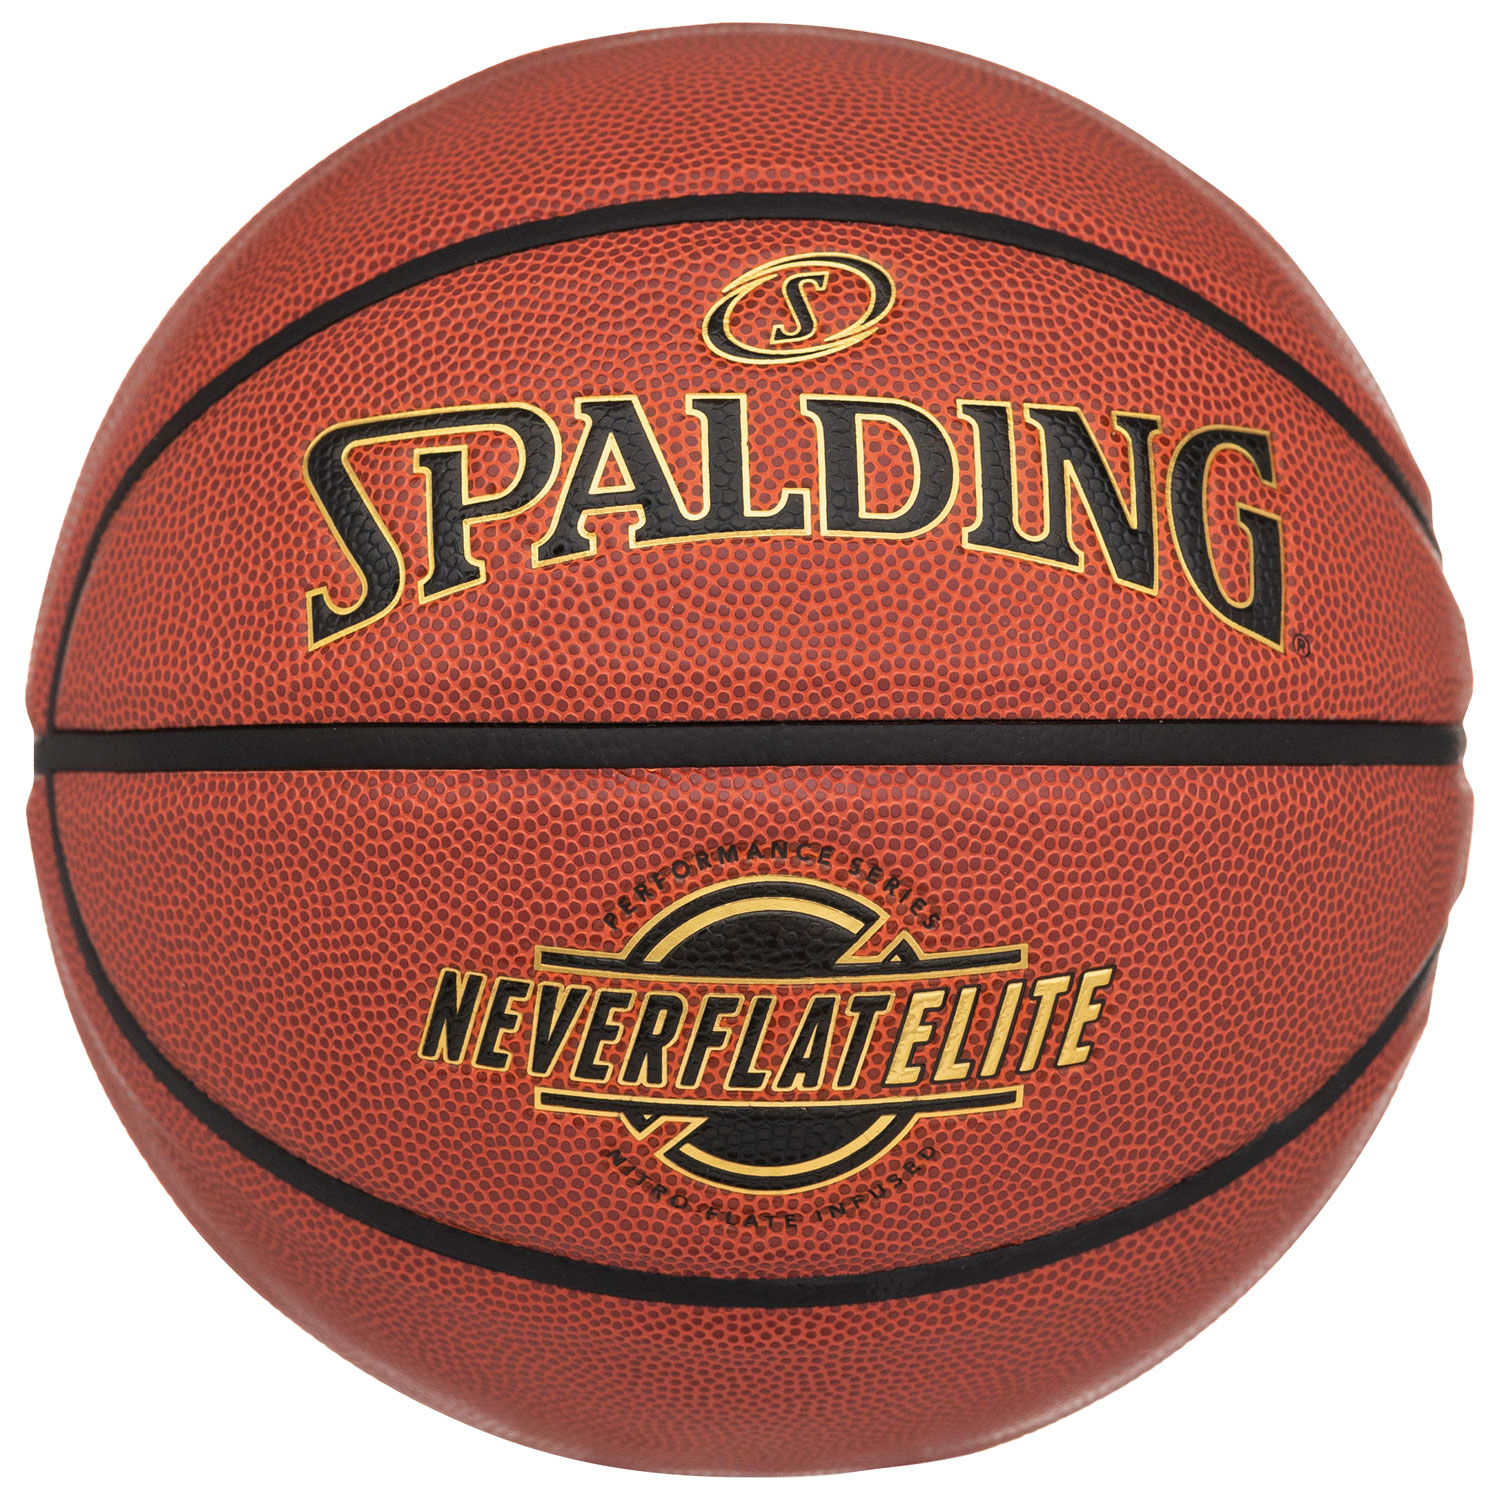 Spalding Neverflat Elite Size 7 (29.5") Basketball